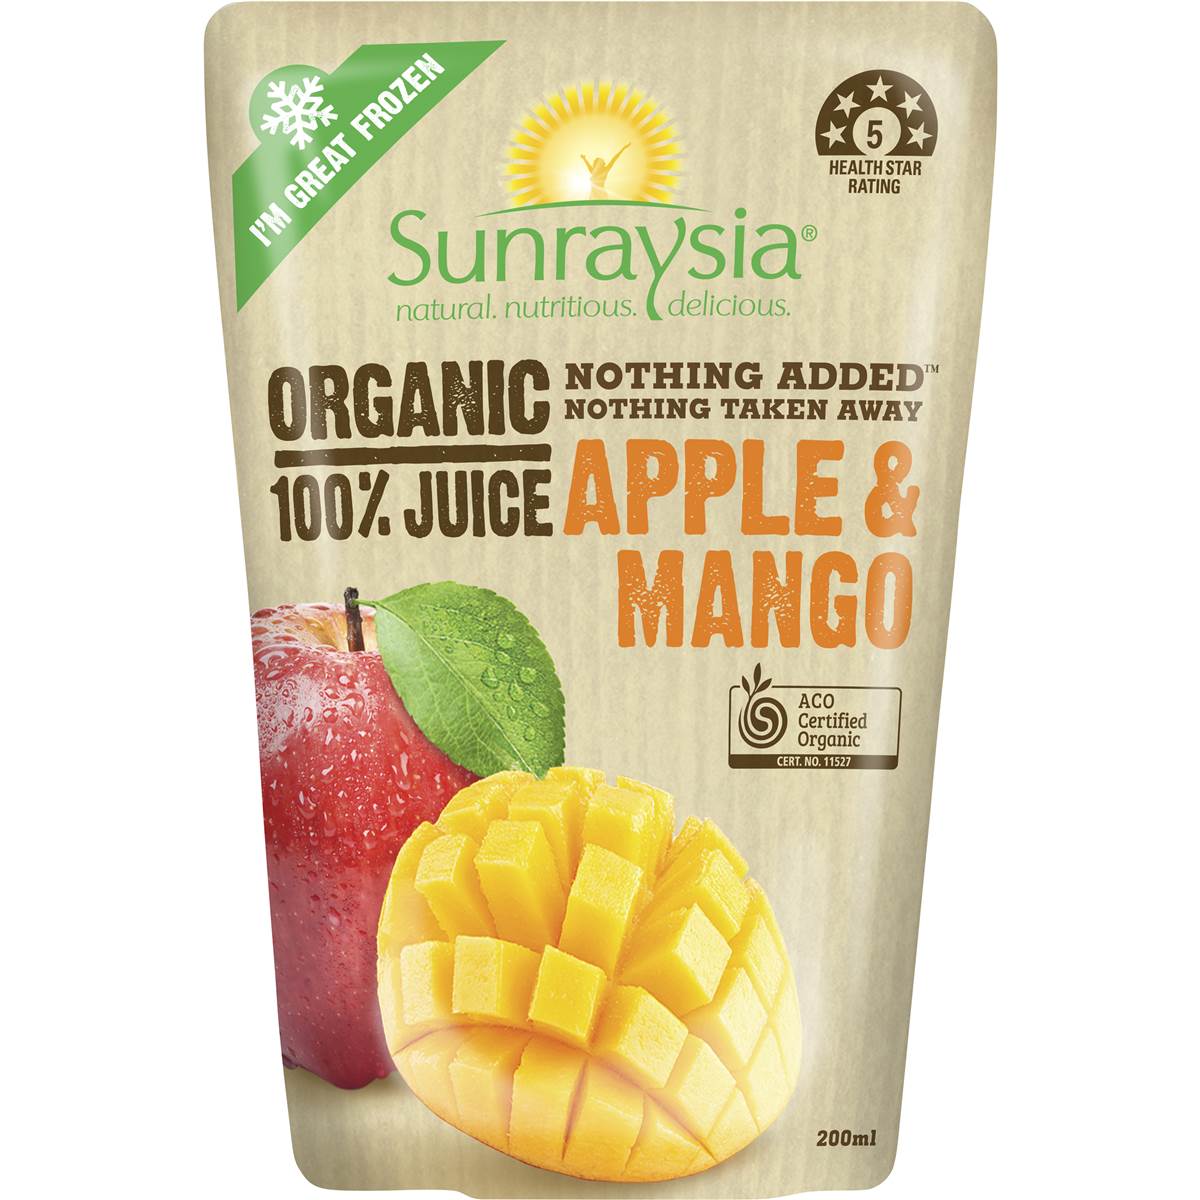 Calories in Sunraysia Organic Apple & Mango Juice